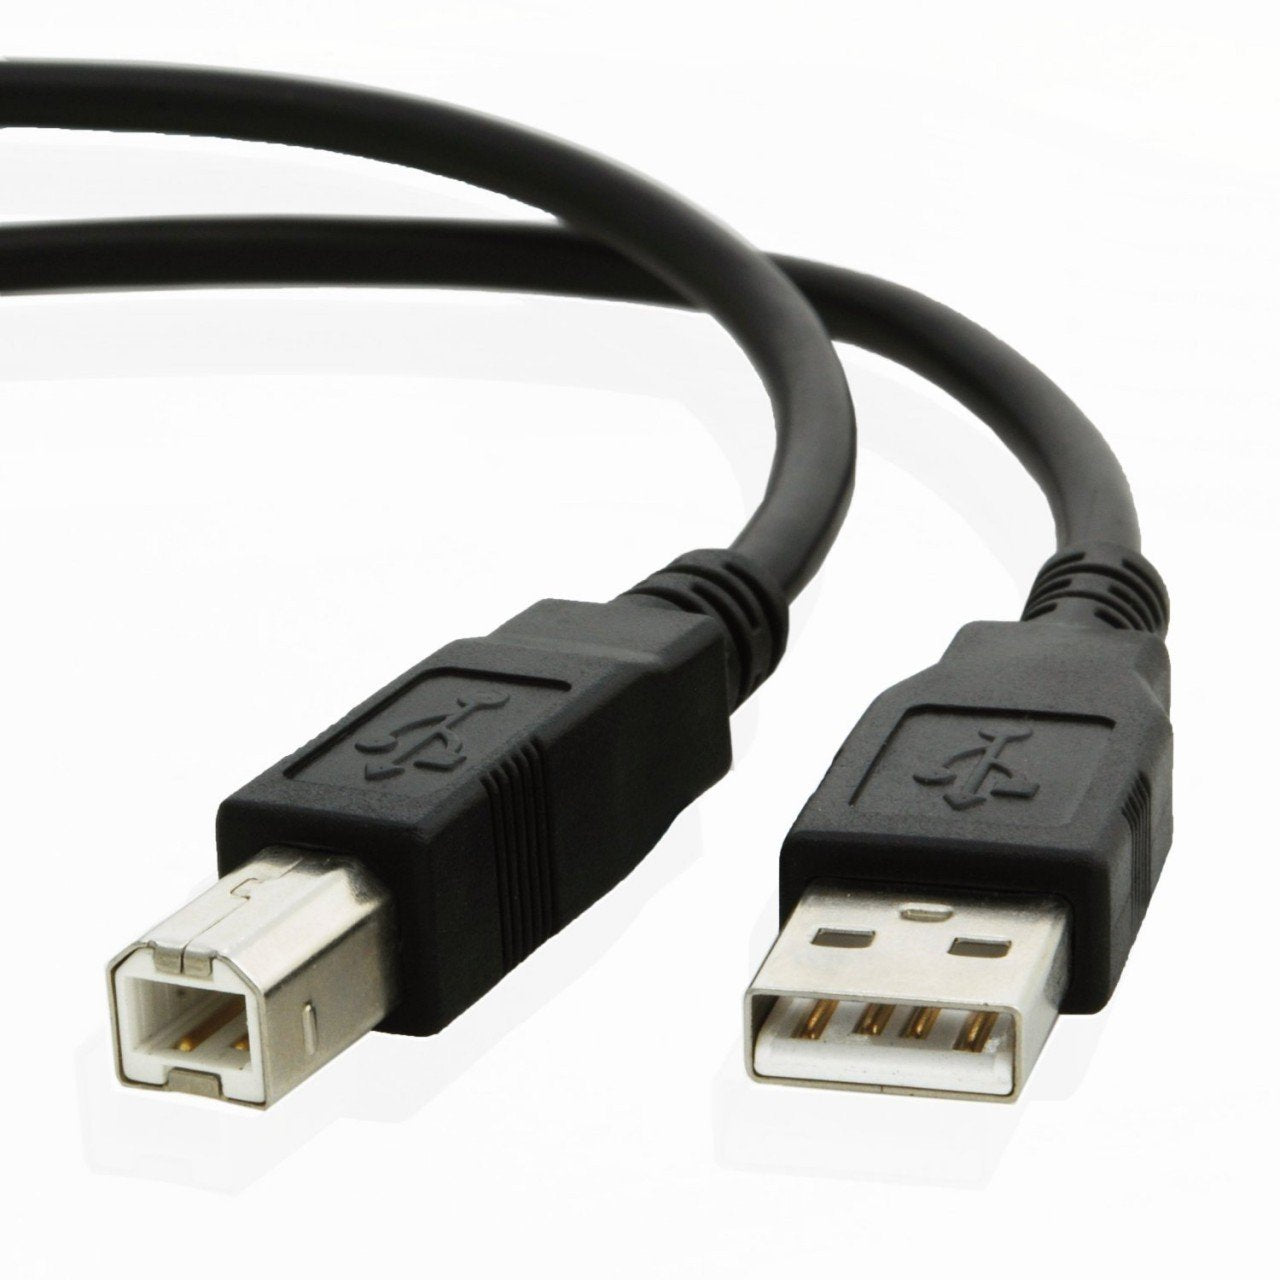 USB cable for Canon PIXMA MX320